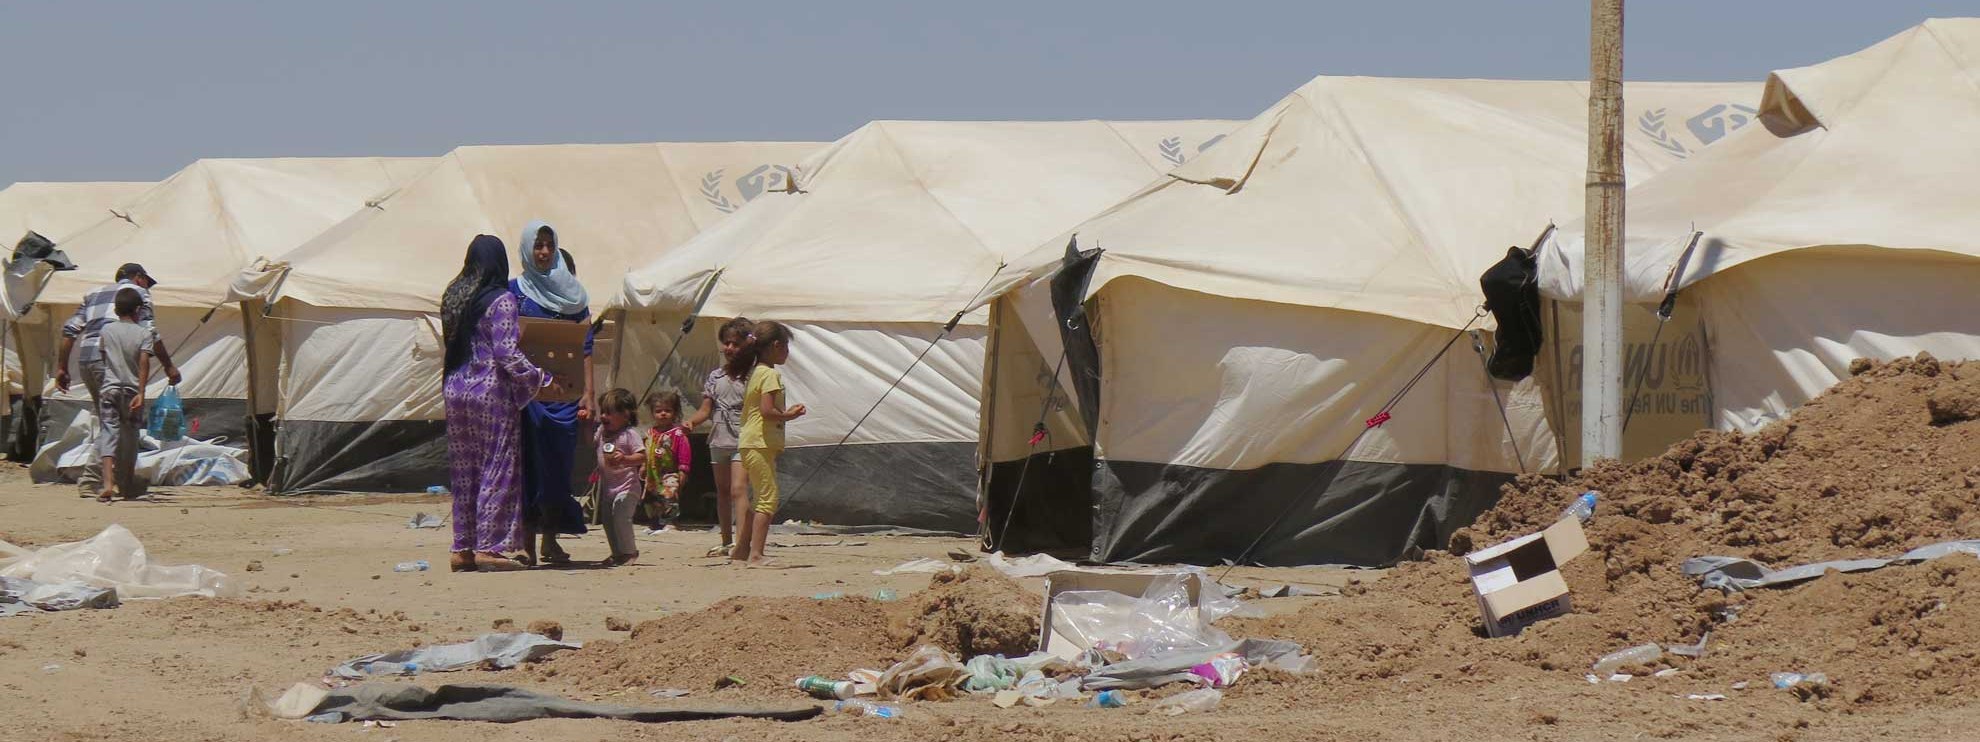 Flüchtlingslager in Kalak, Irak. © Amnesty International